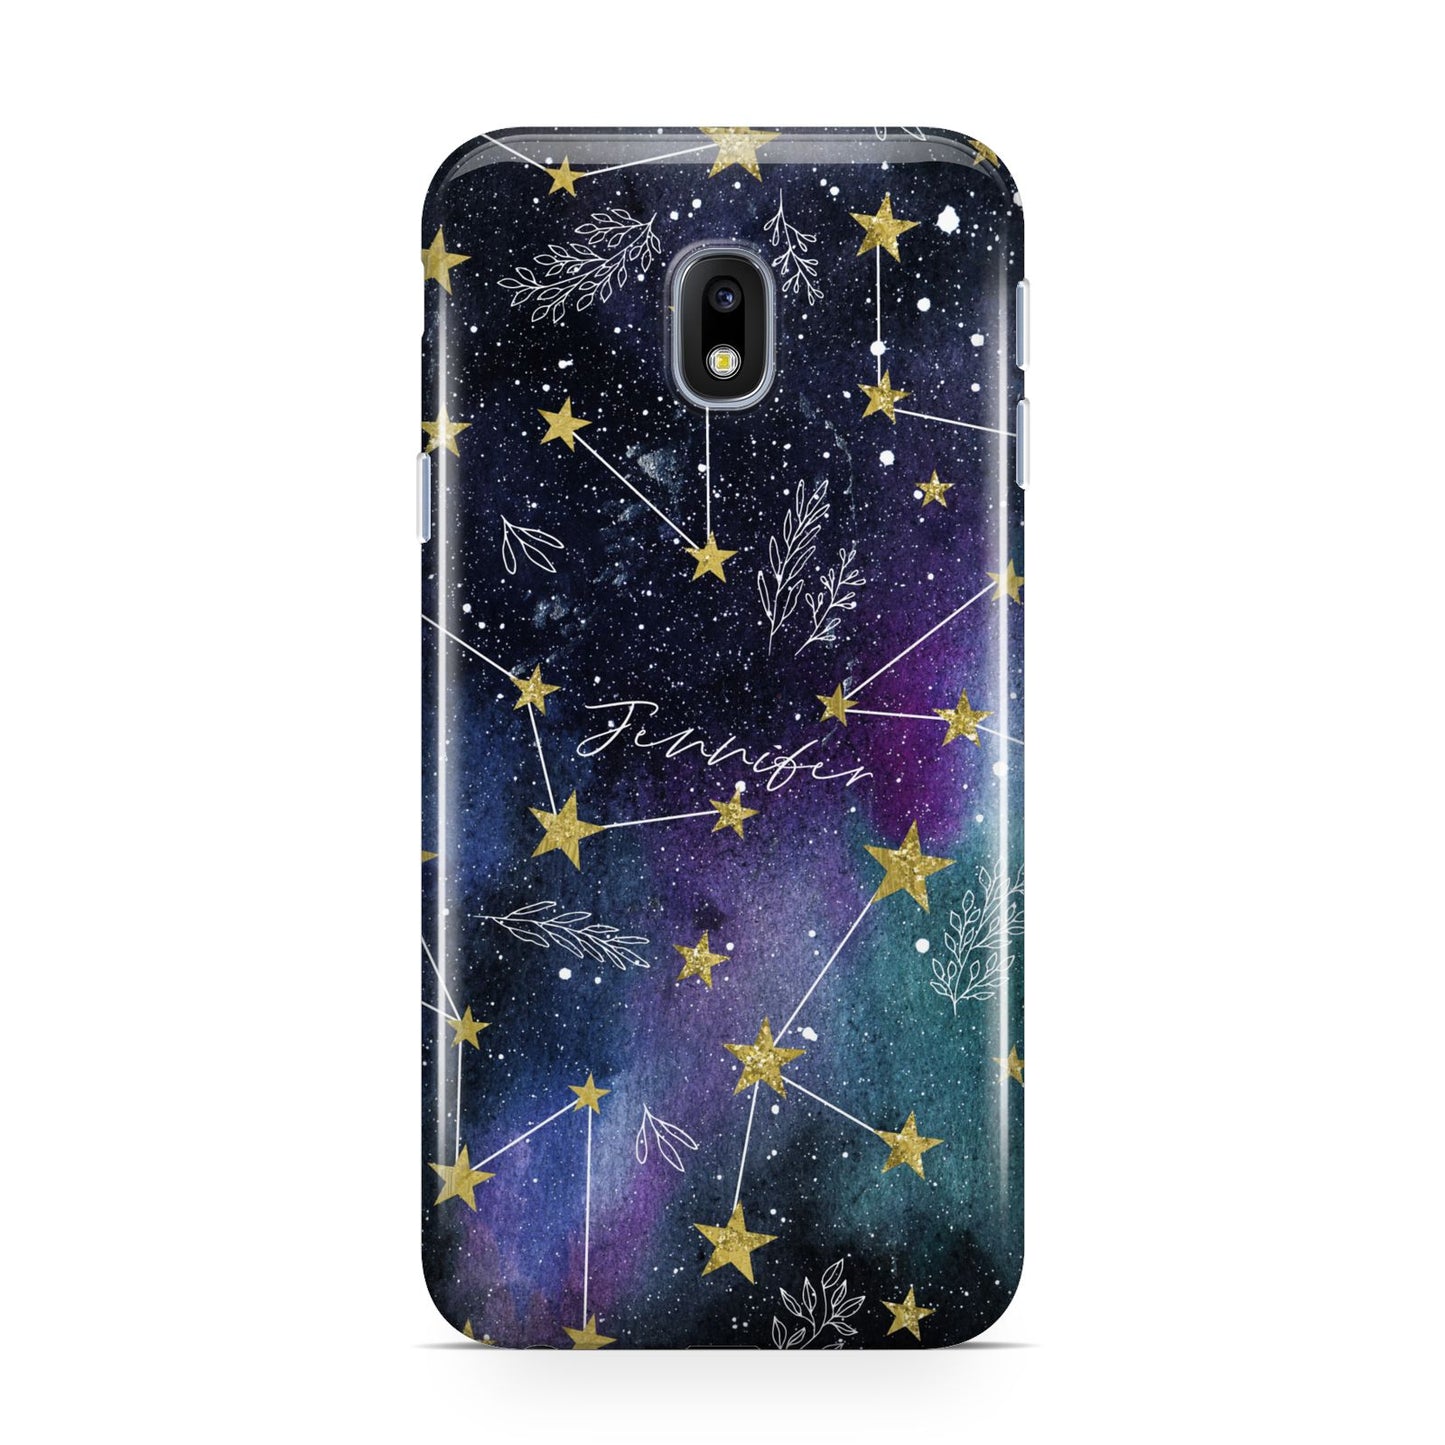 Personalised Constellation Samsung Galaxy J3 2017 Case